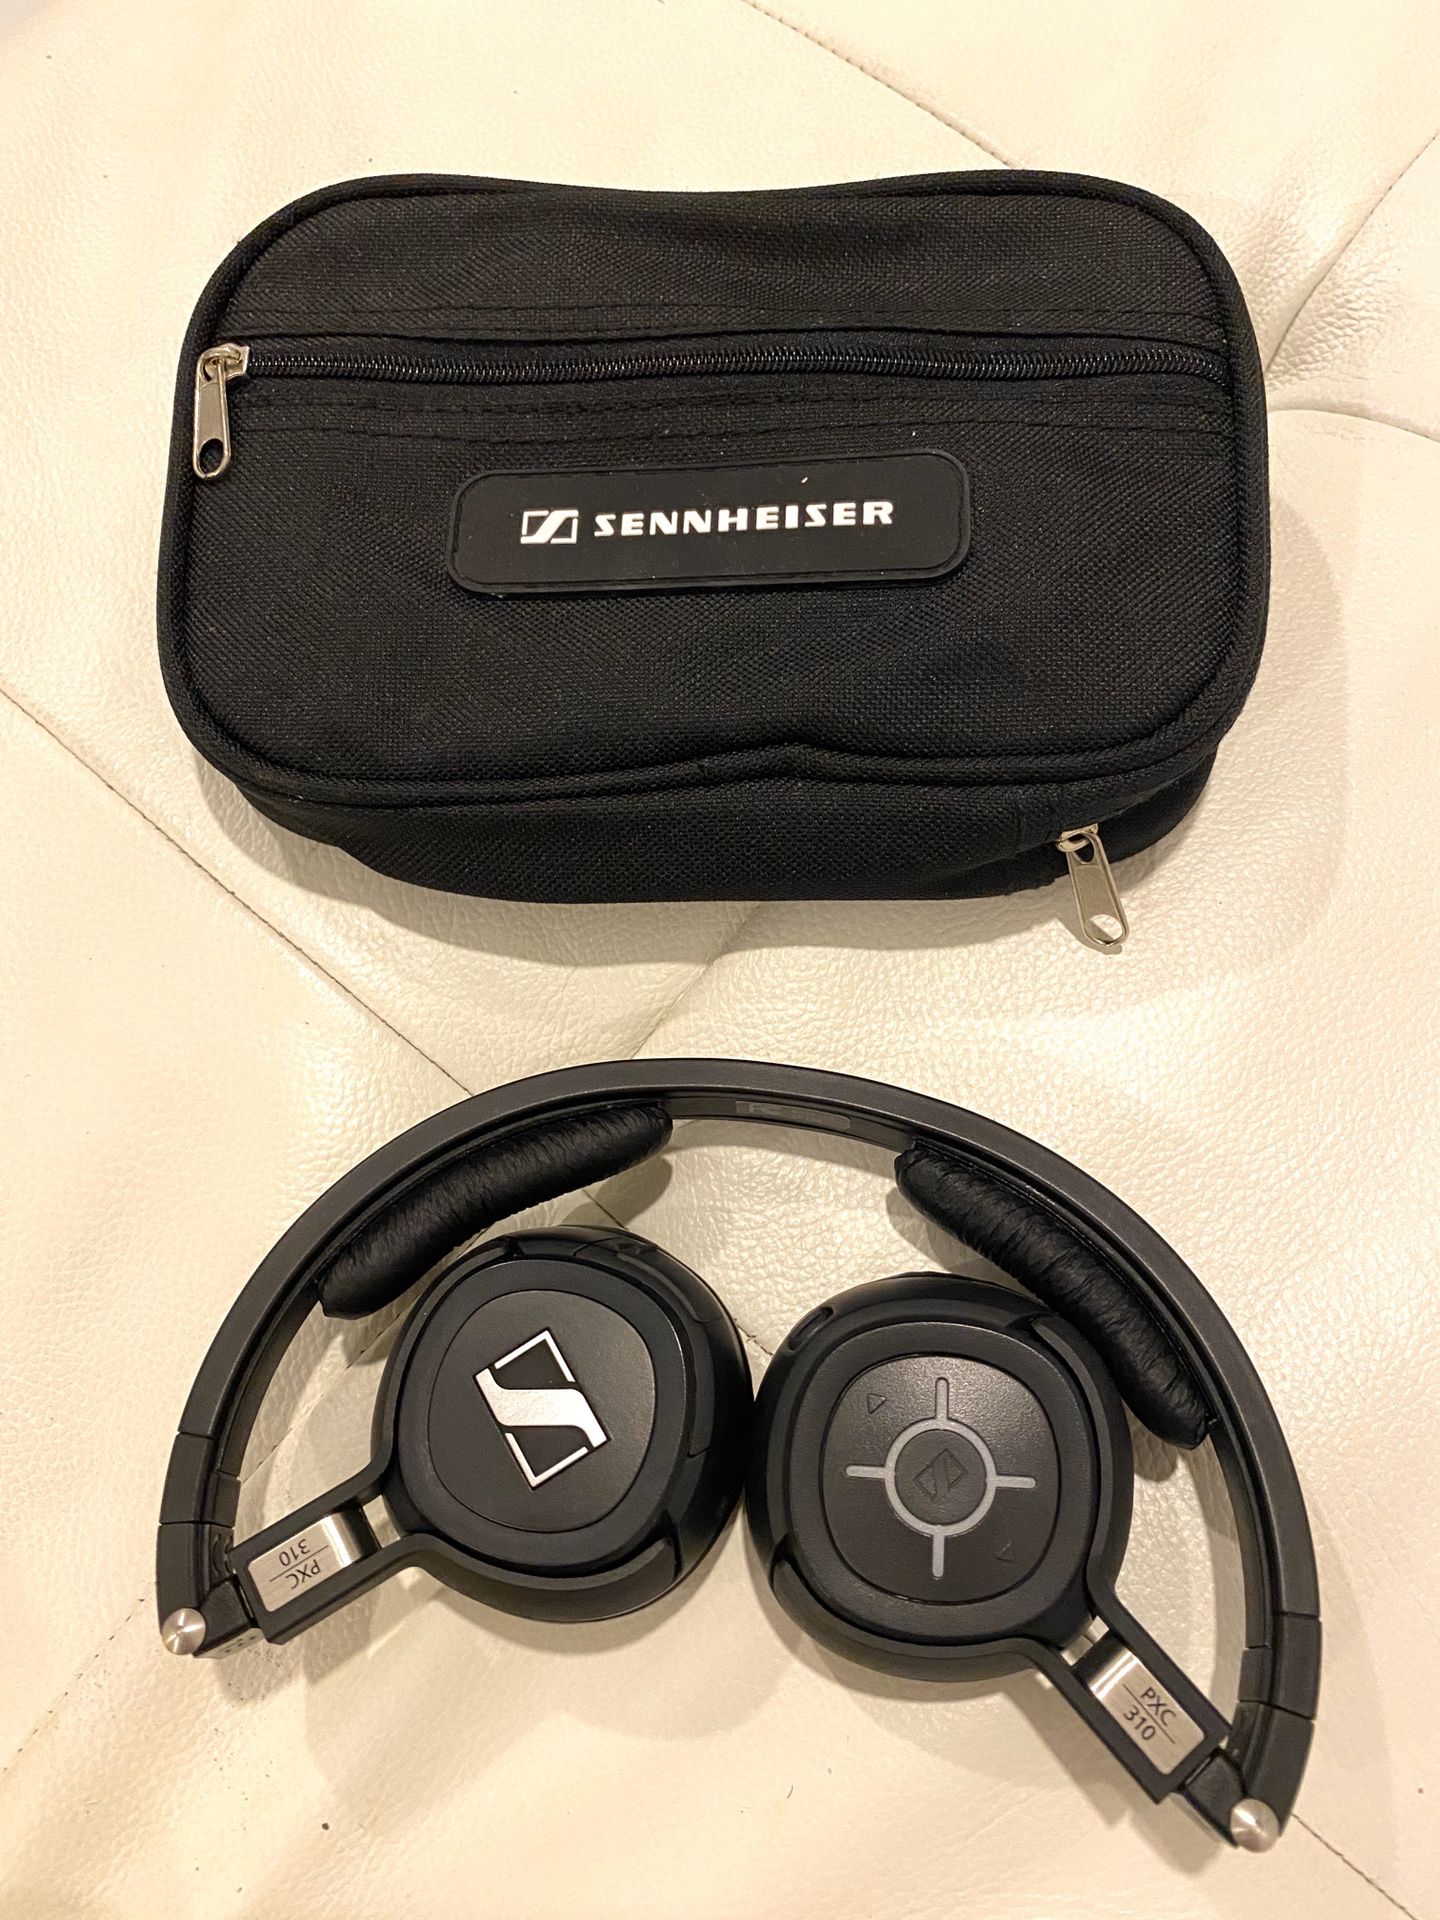 Sennheiser PXC 310 BT Compact Noise-Canceling Travel Headphones with Bluetooth